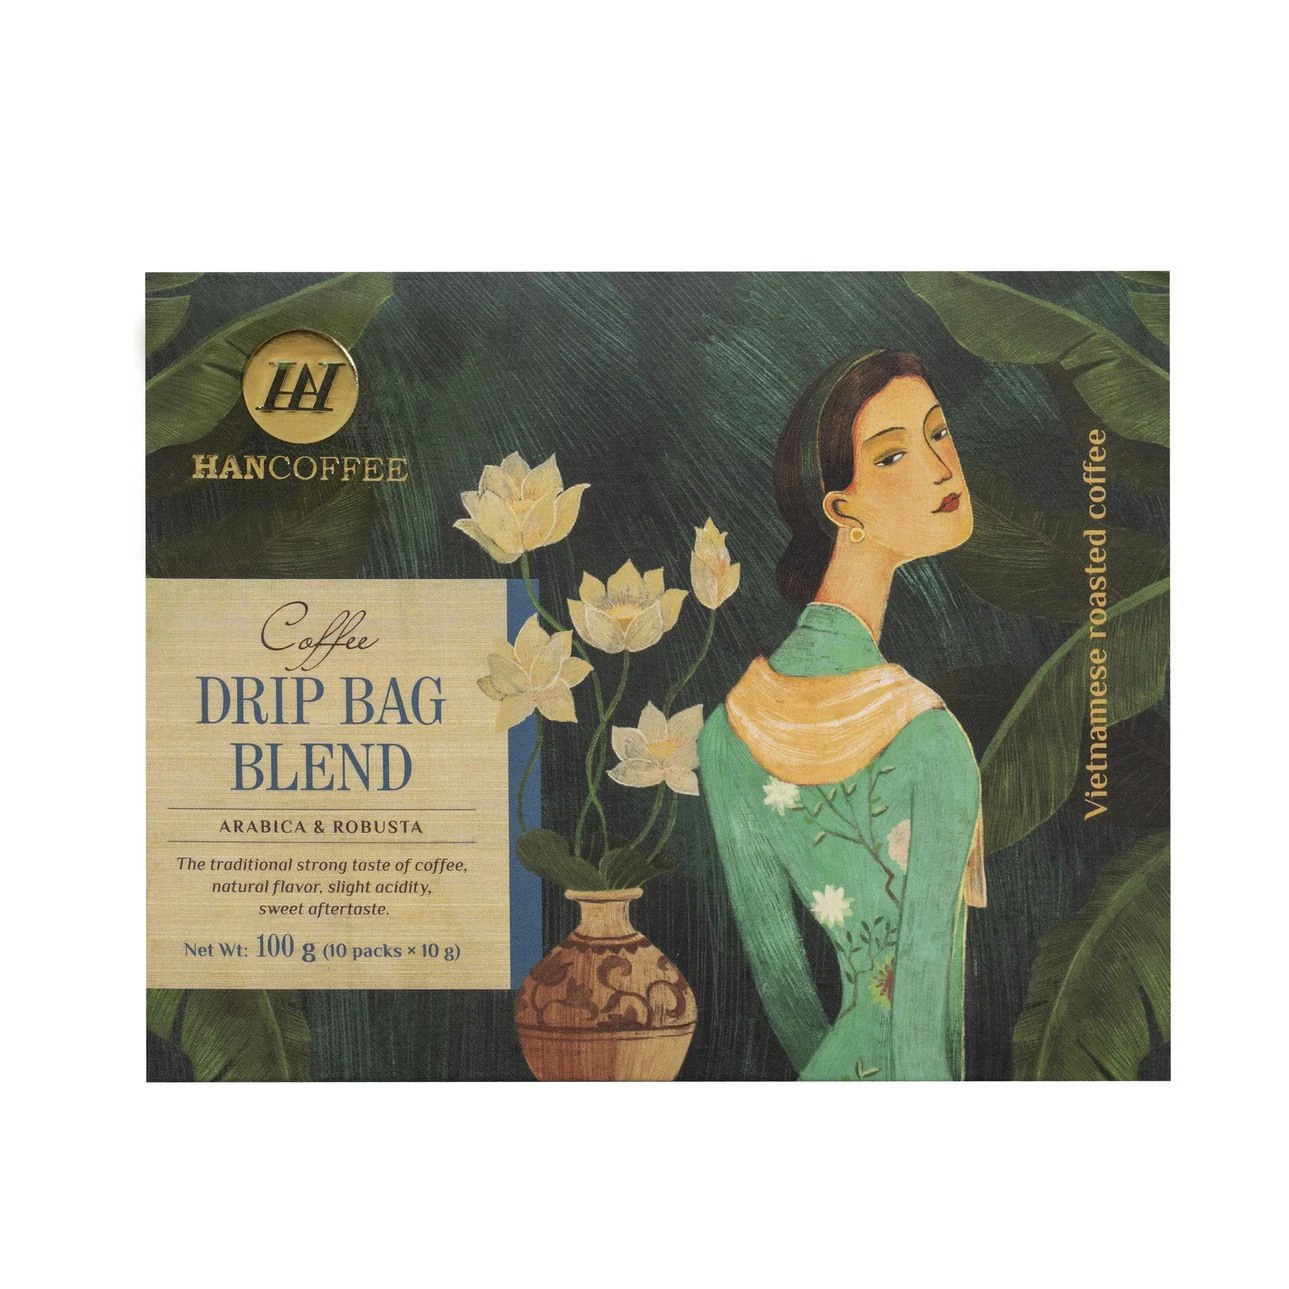 HANCOFFEE Filter/Drip Bag Blend & Arabica Premium High-quality Coffee